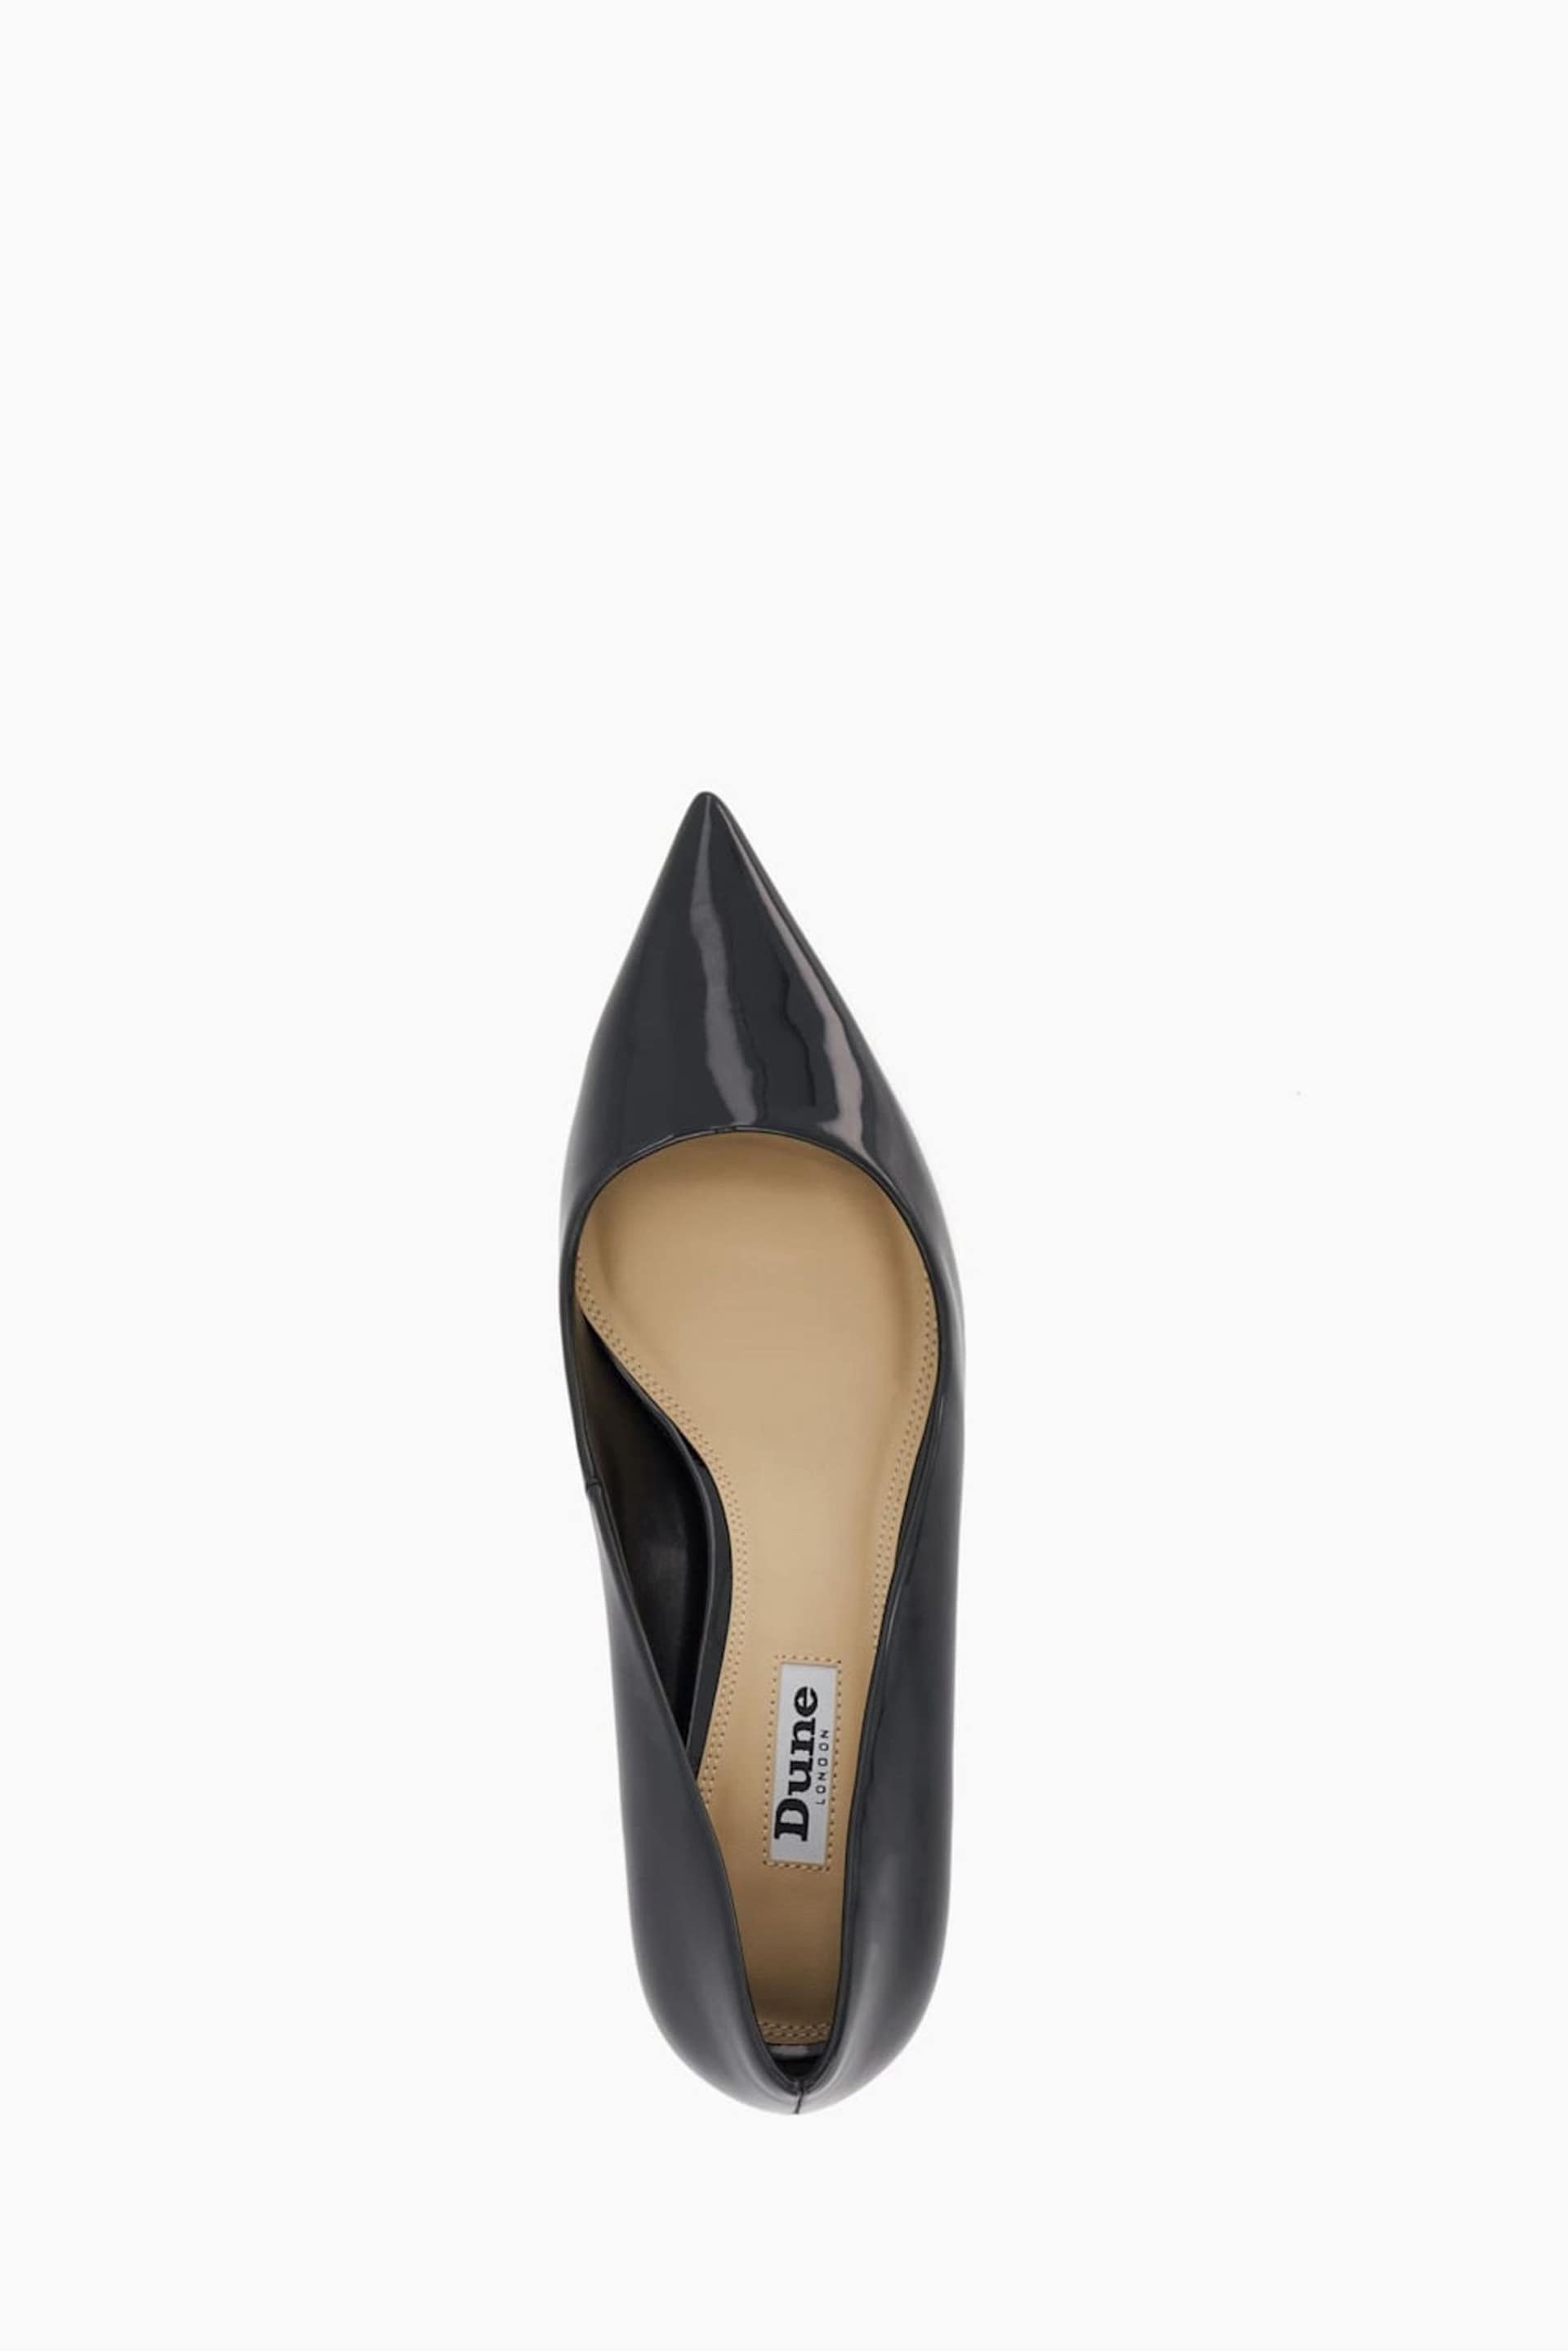 Dune London Black Advanced Mid Heel Court Shoes - Image 5 of 5